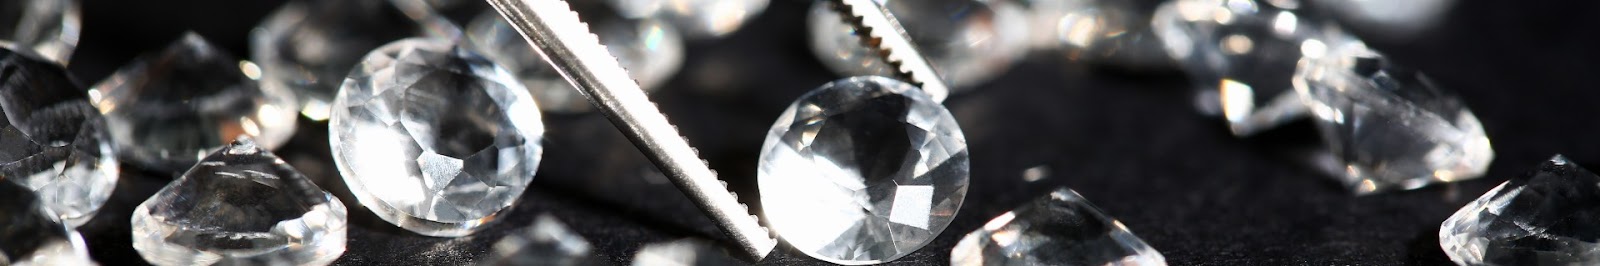 MAKE THOM DUMA FINE JEWELERS YOUR FIRST CHOICE FOR LOOSE DIAMONDS